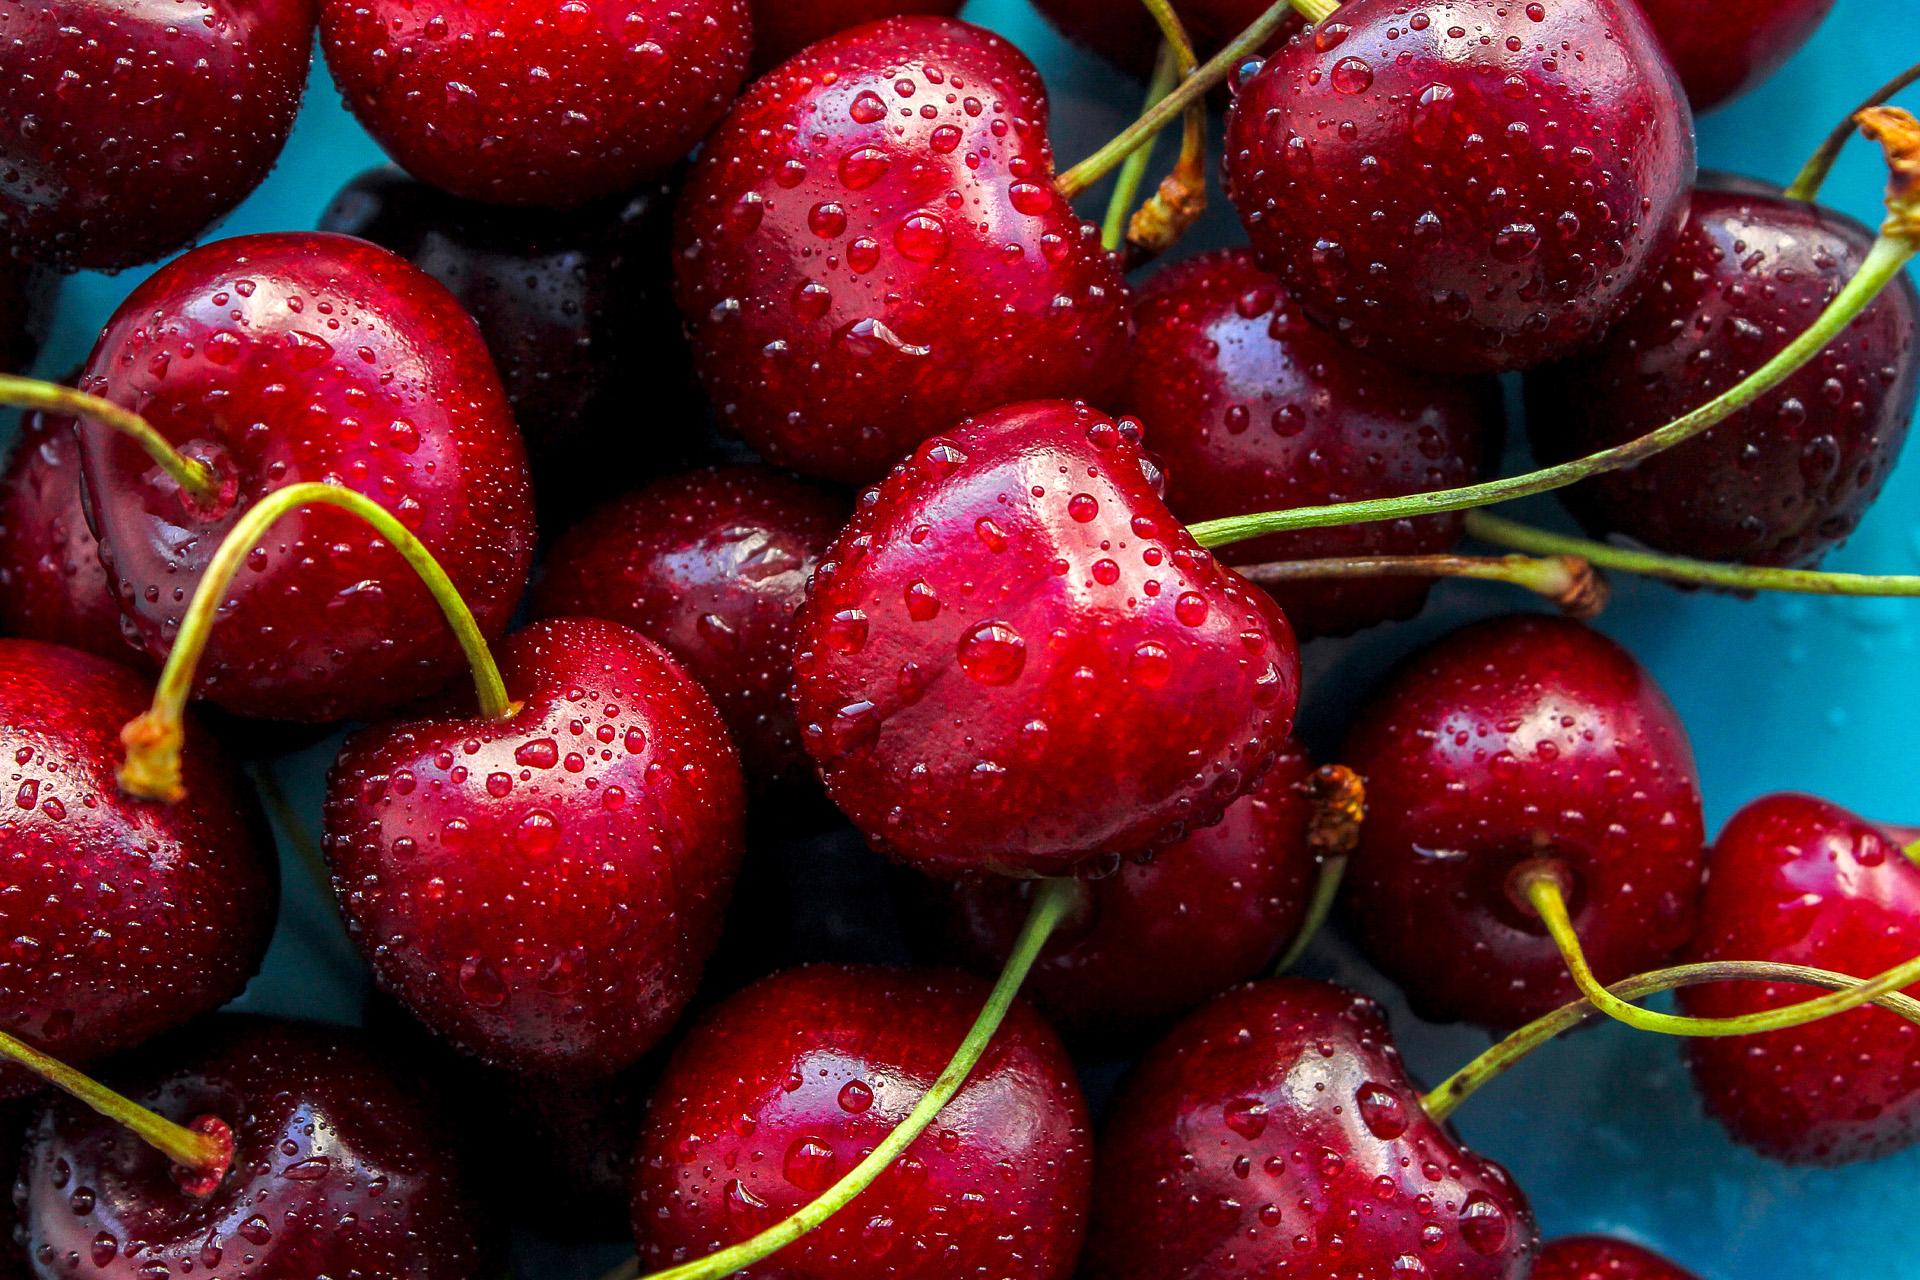 Cherries Benefits: 9 Amazing Health Benefits You Should Know